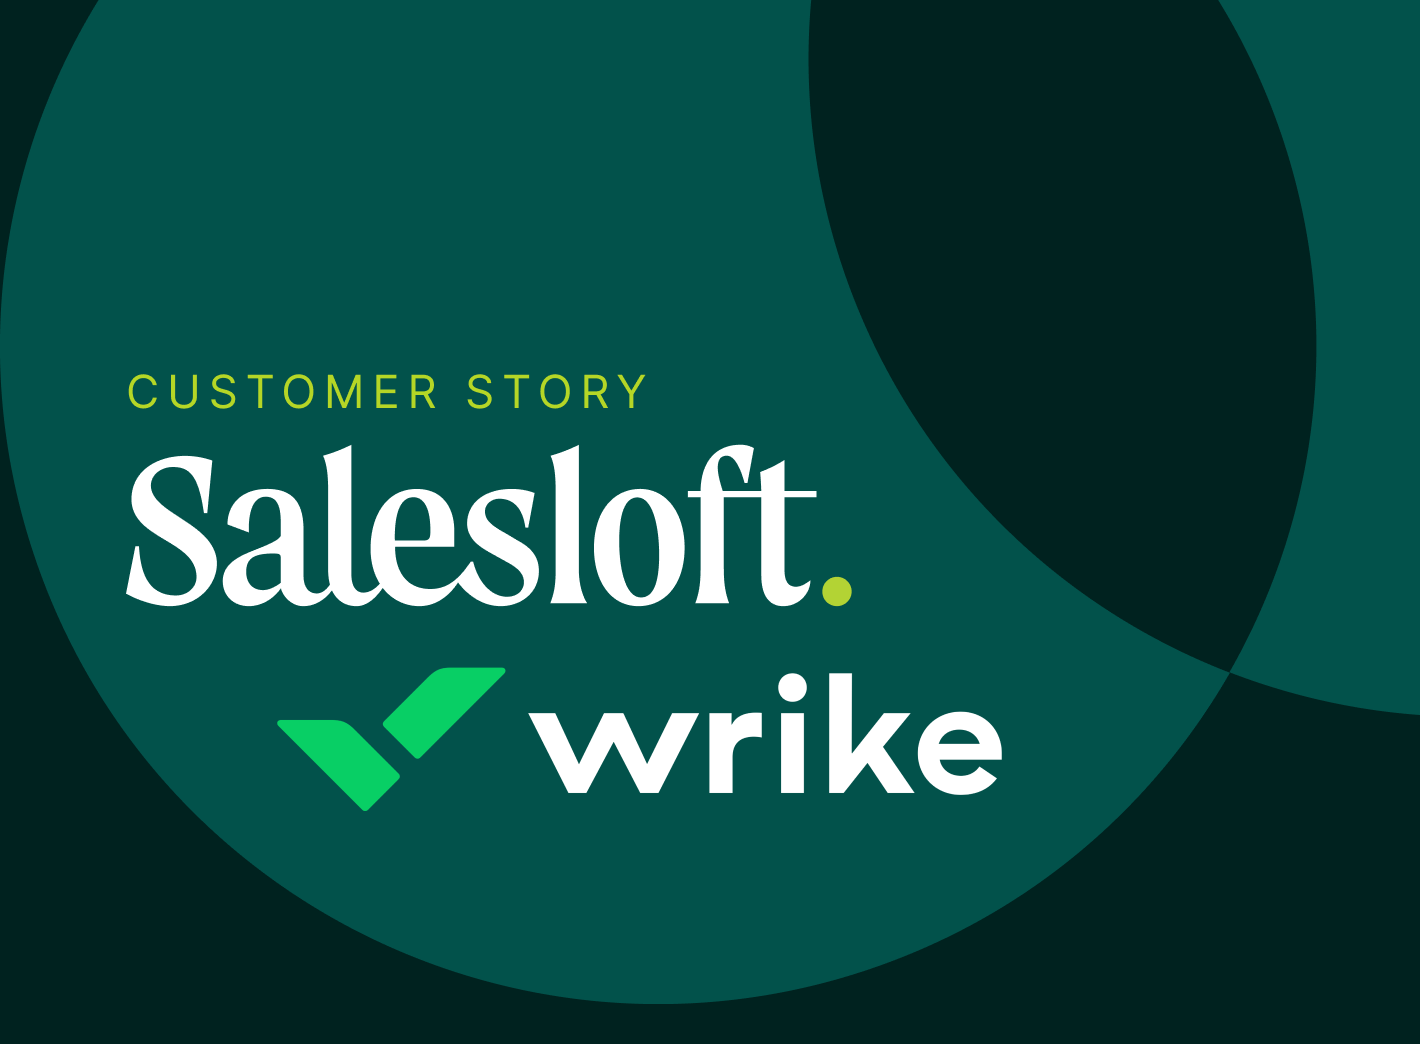 A header for Salesloft's Wrike customer story